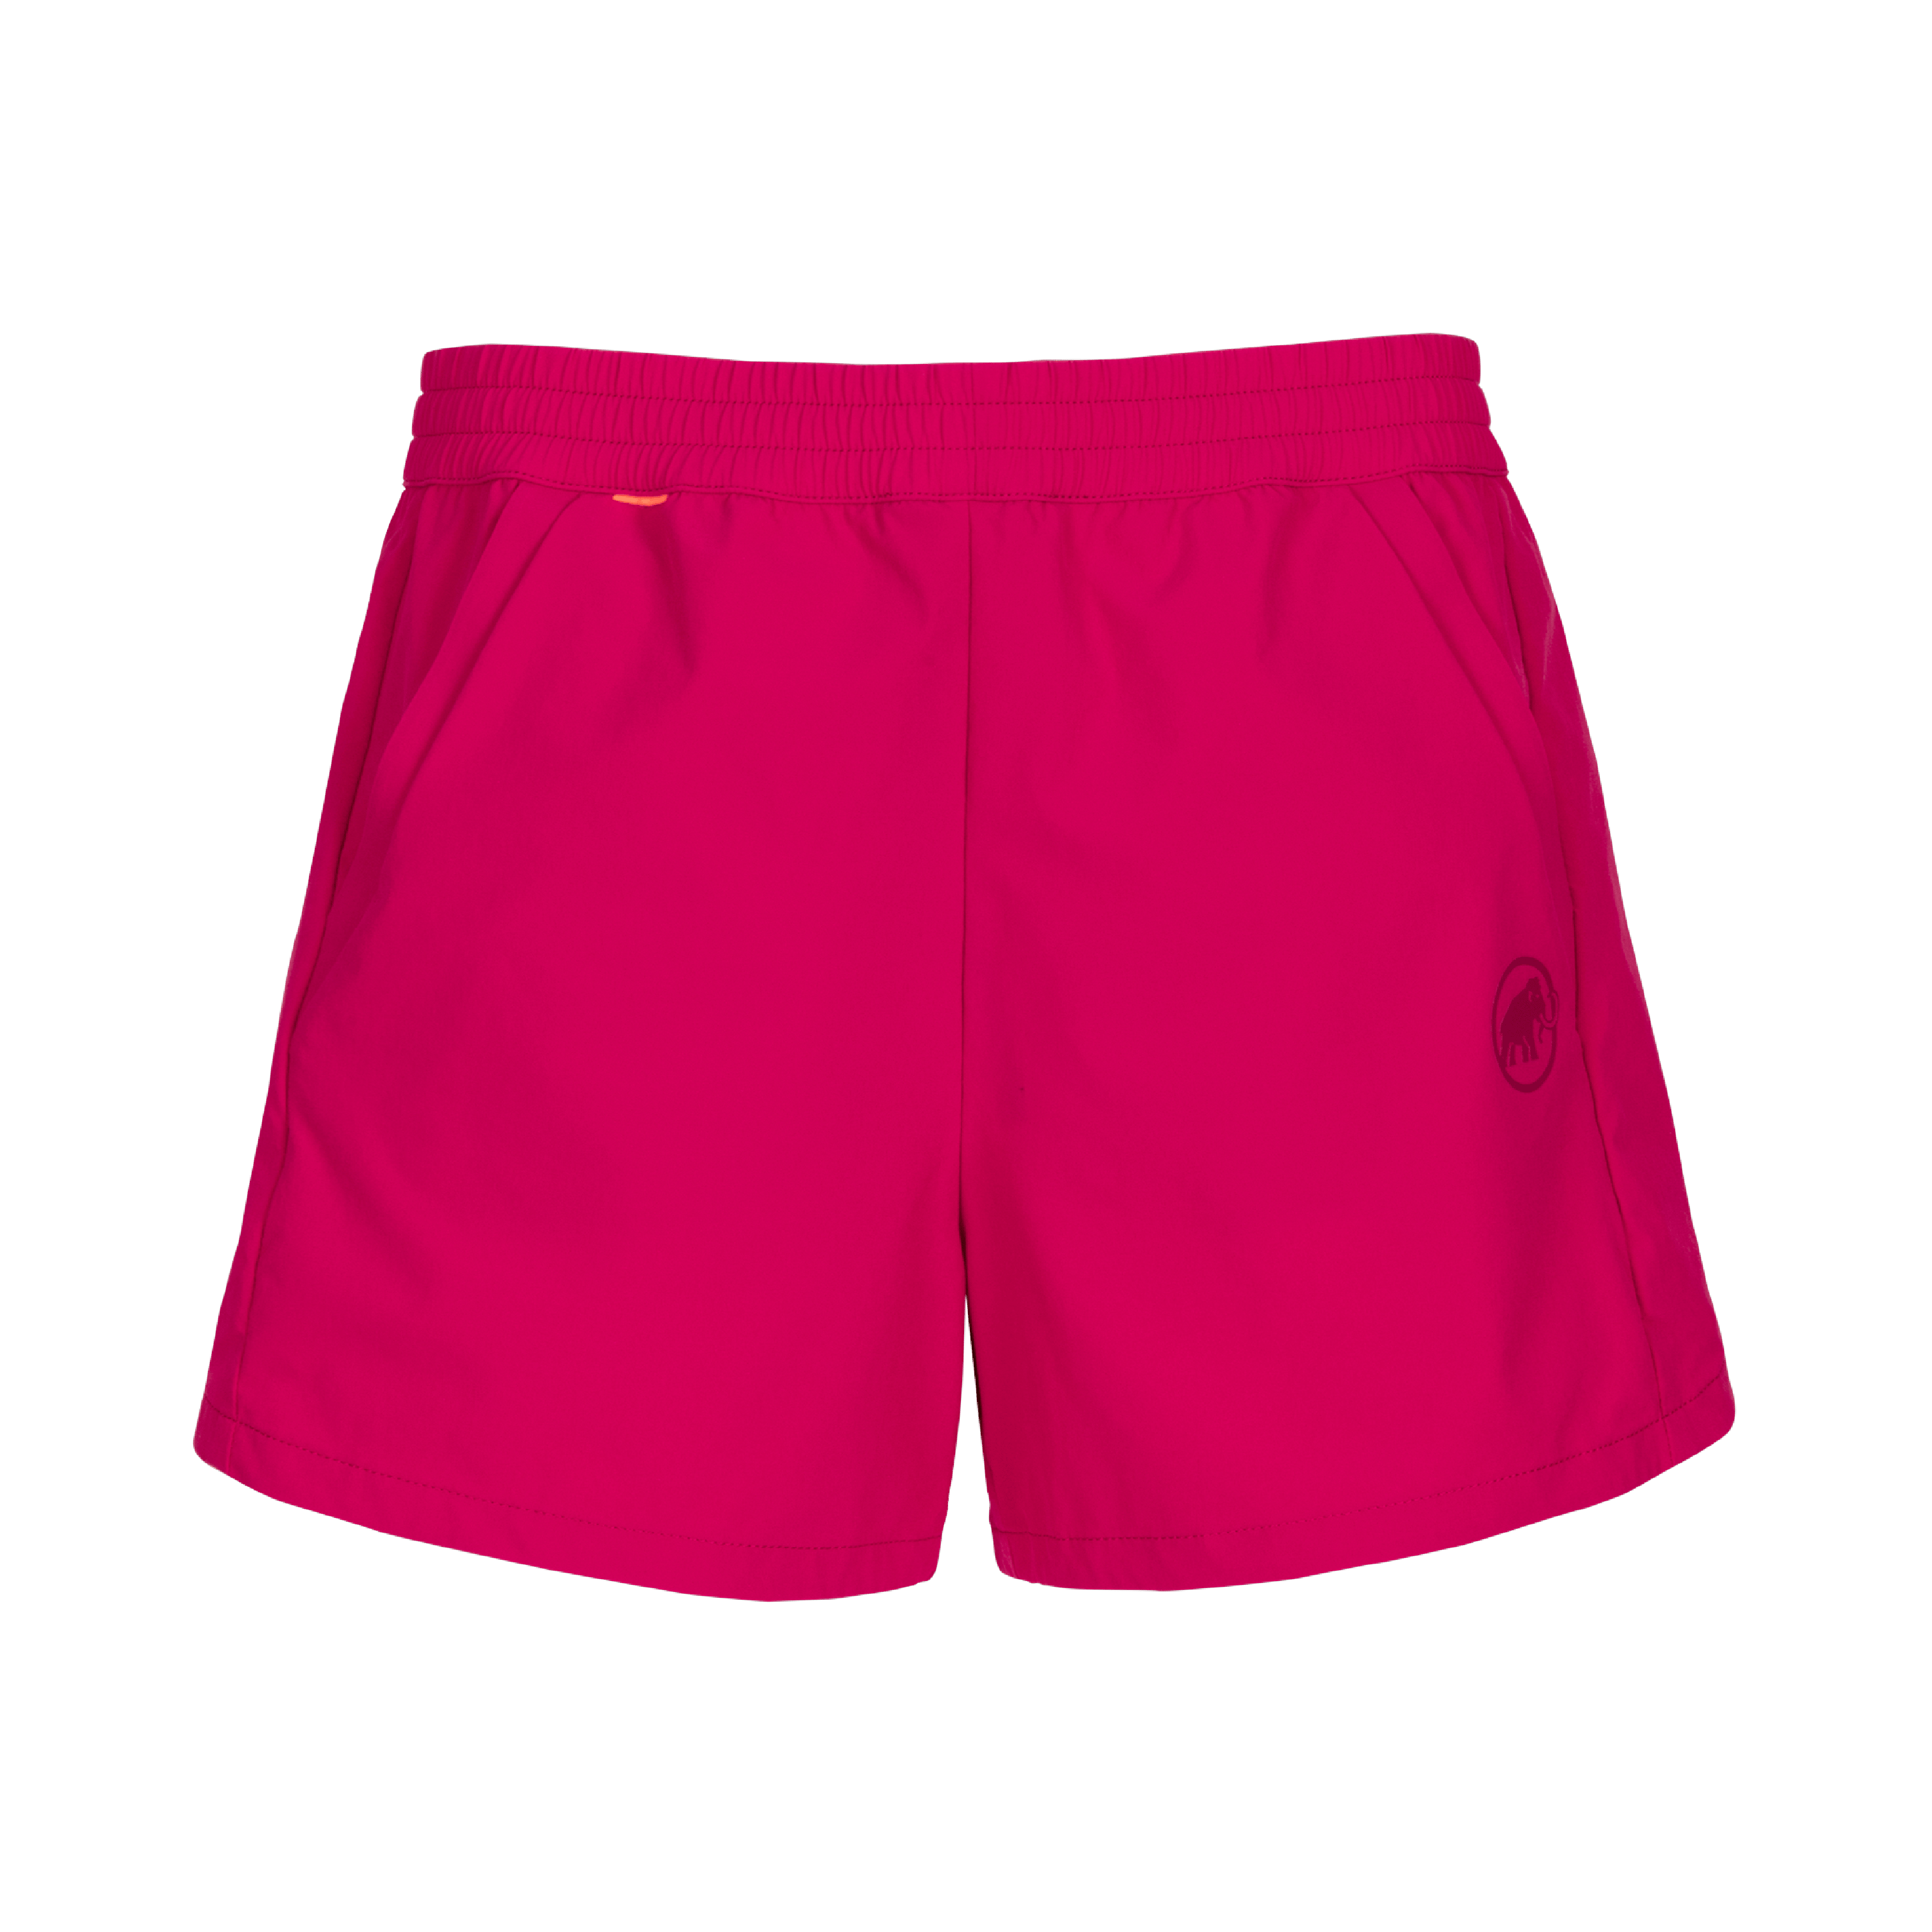 Crashiano Shorts Women